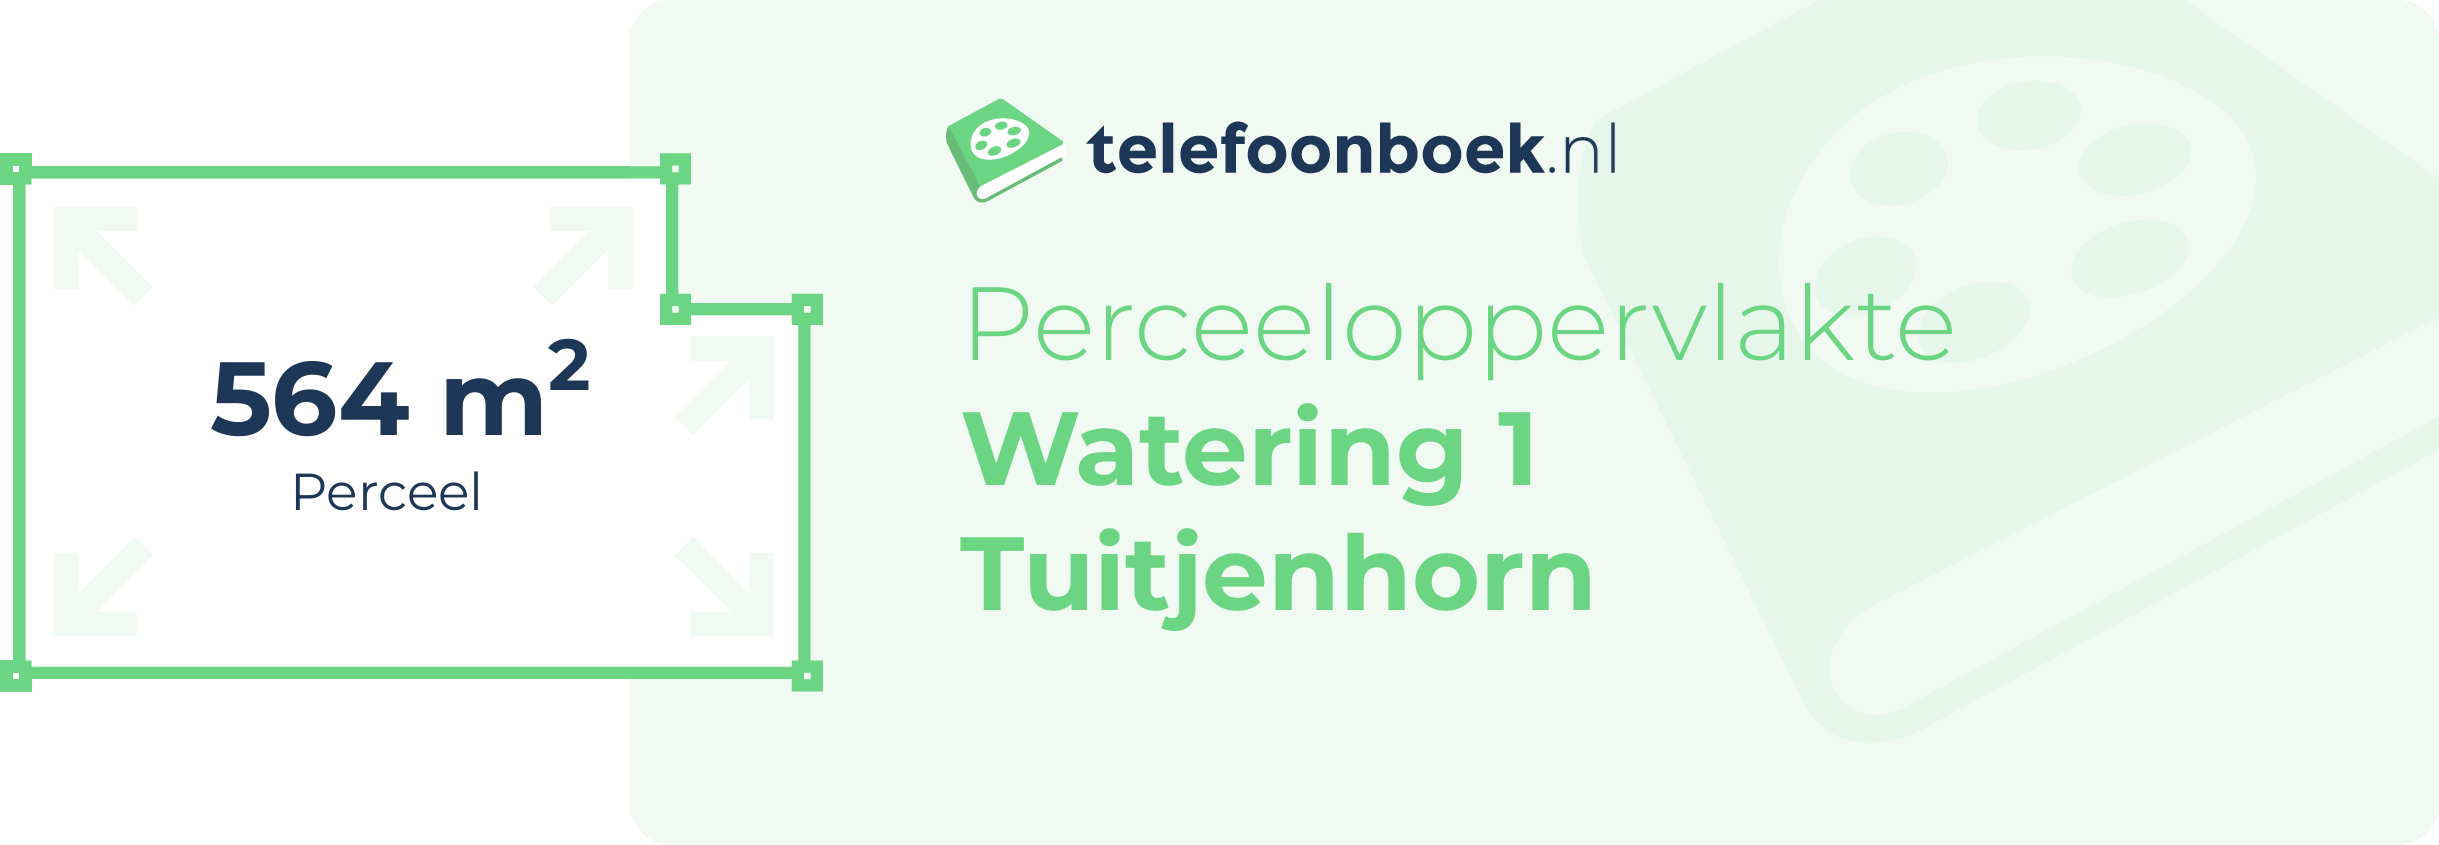 Perceeloppervlakte Watering 1 Tuitjenhorn